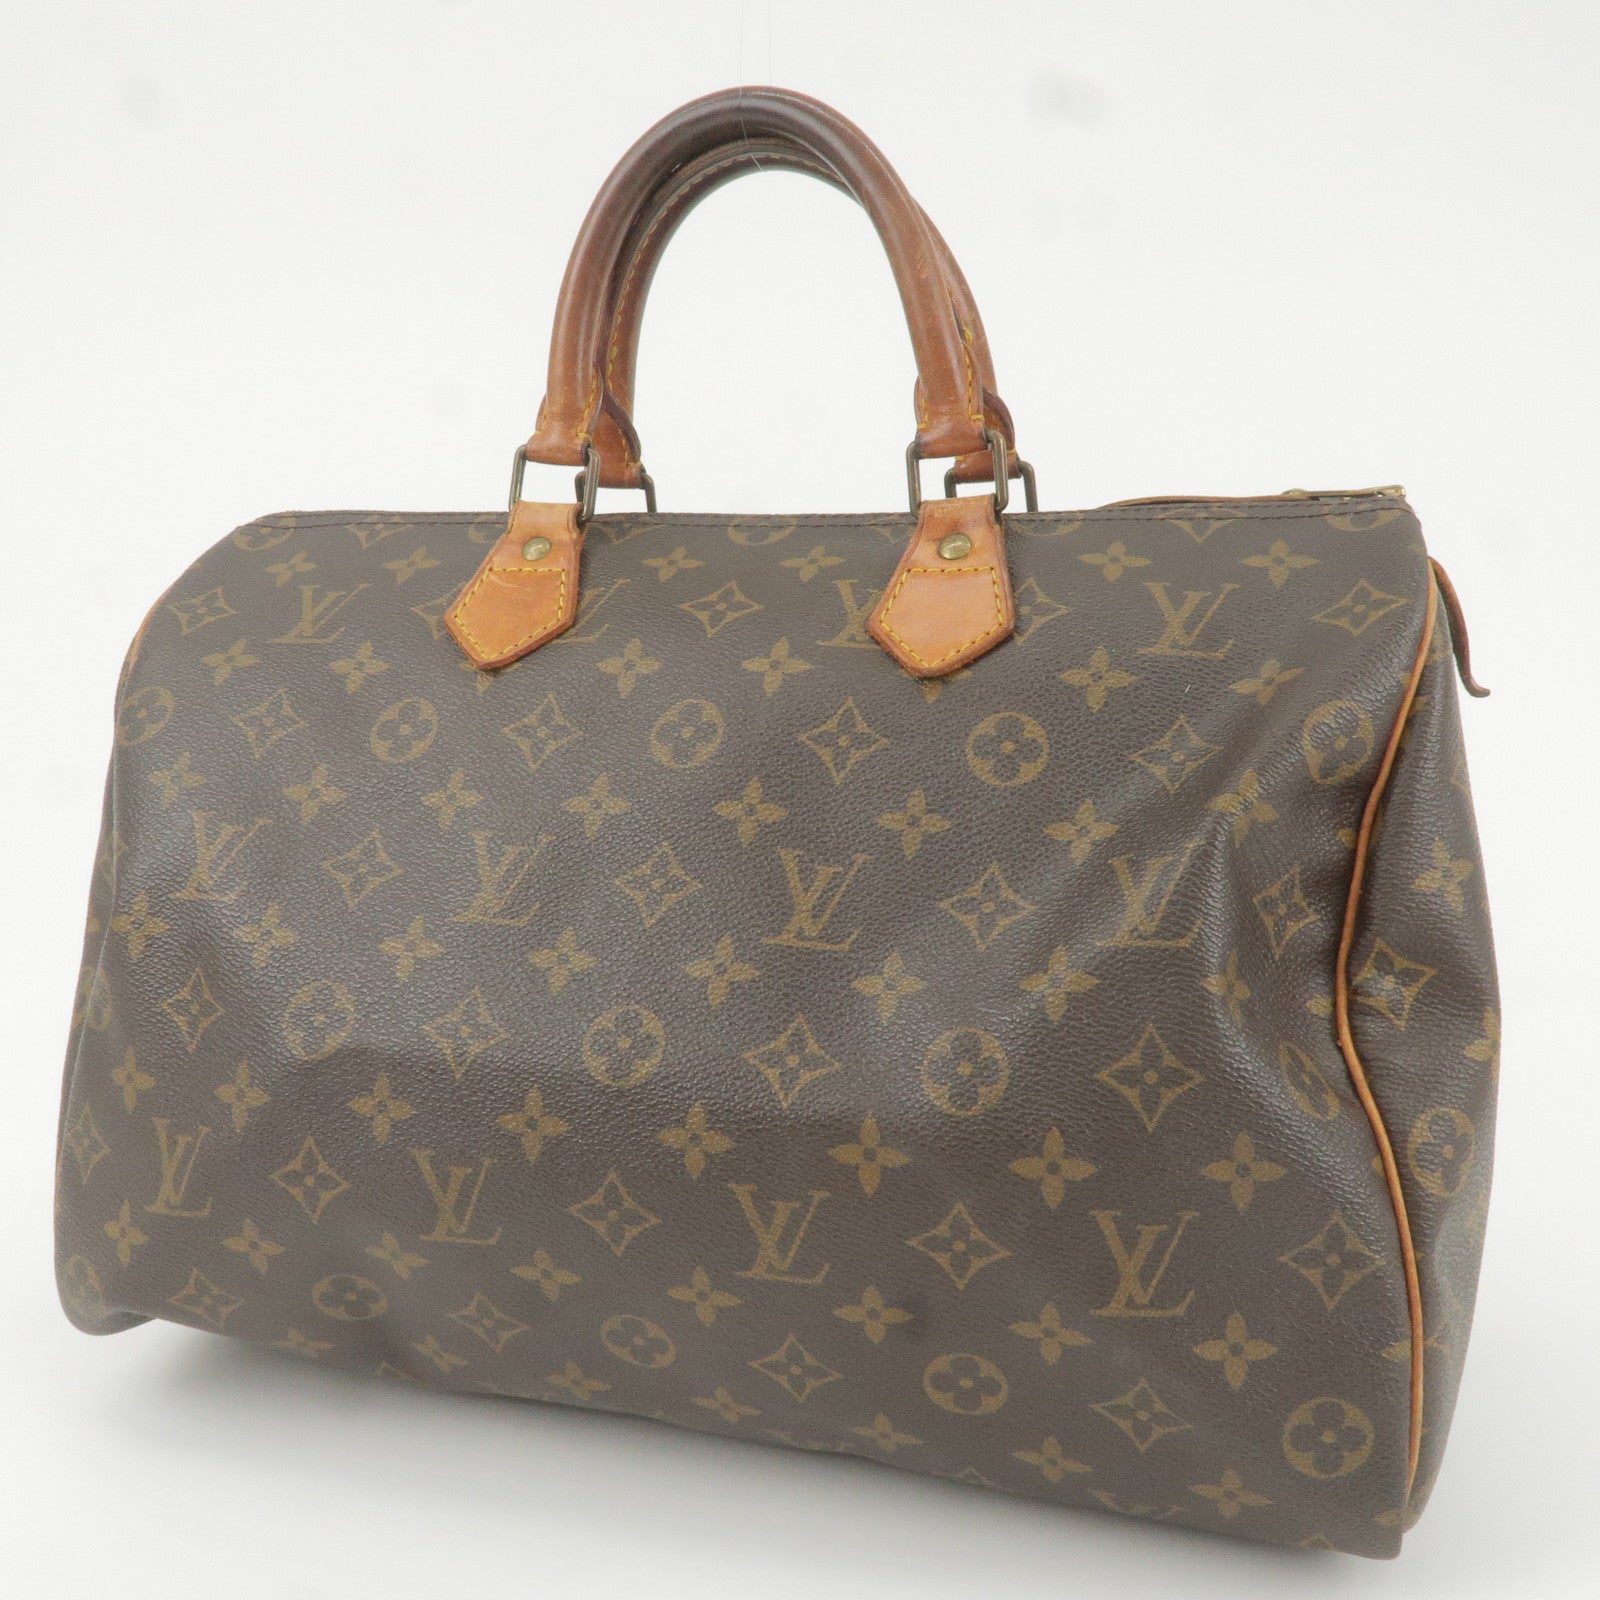 Louis Vuitton petit Noé small model handbag in red epi leather - Monogram -  M41524 – dct - Vuitton - Hand - 35 - Boston - Louis - Bag - Bag -  ep_vintage luxury Store - Speedy